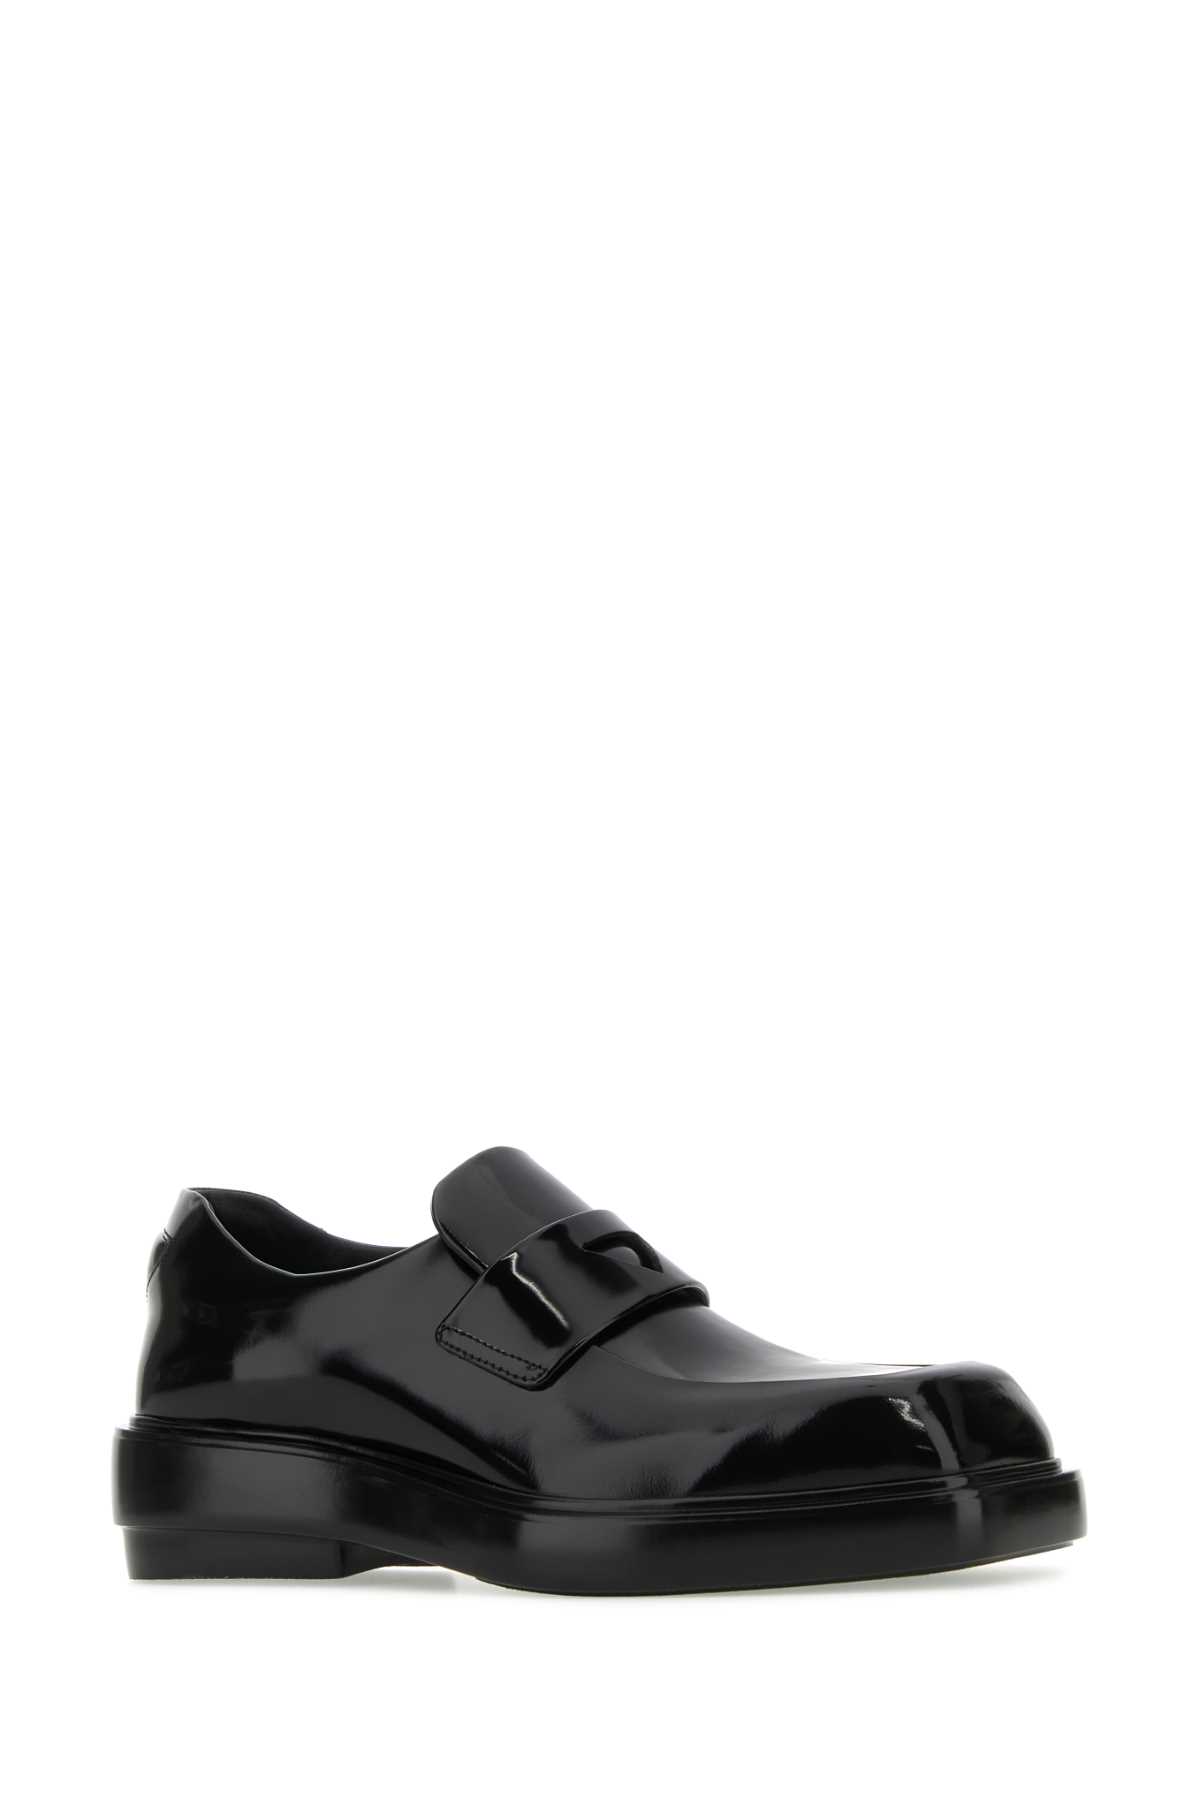 Prada Black Leather Loafers In Nero